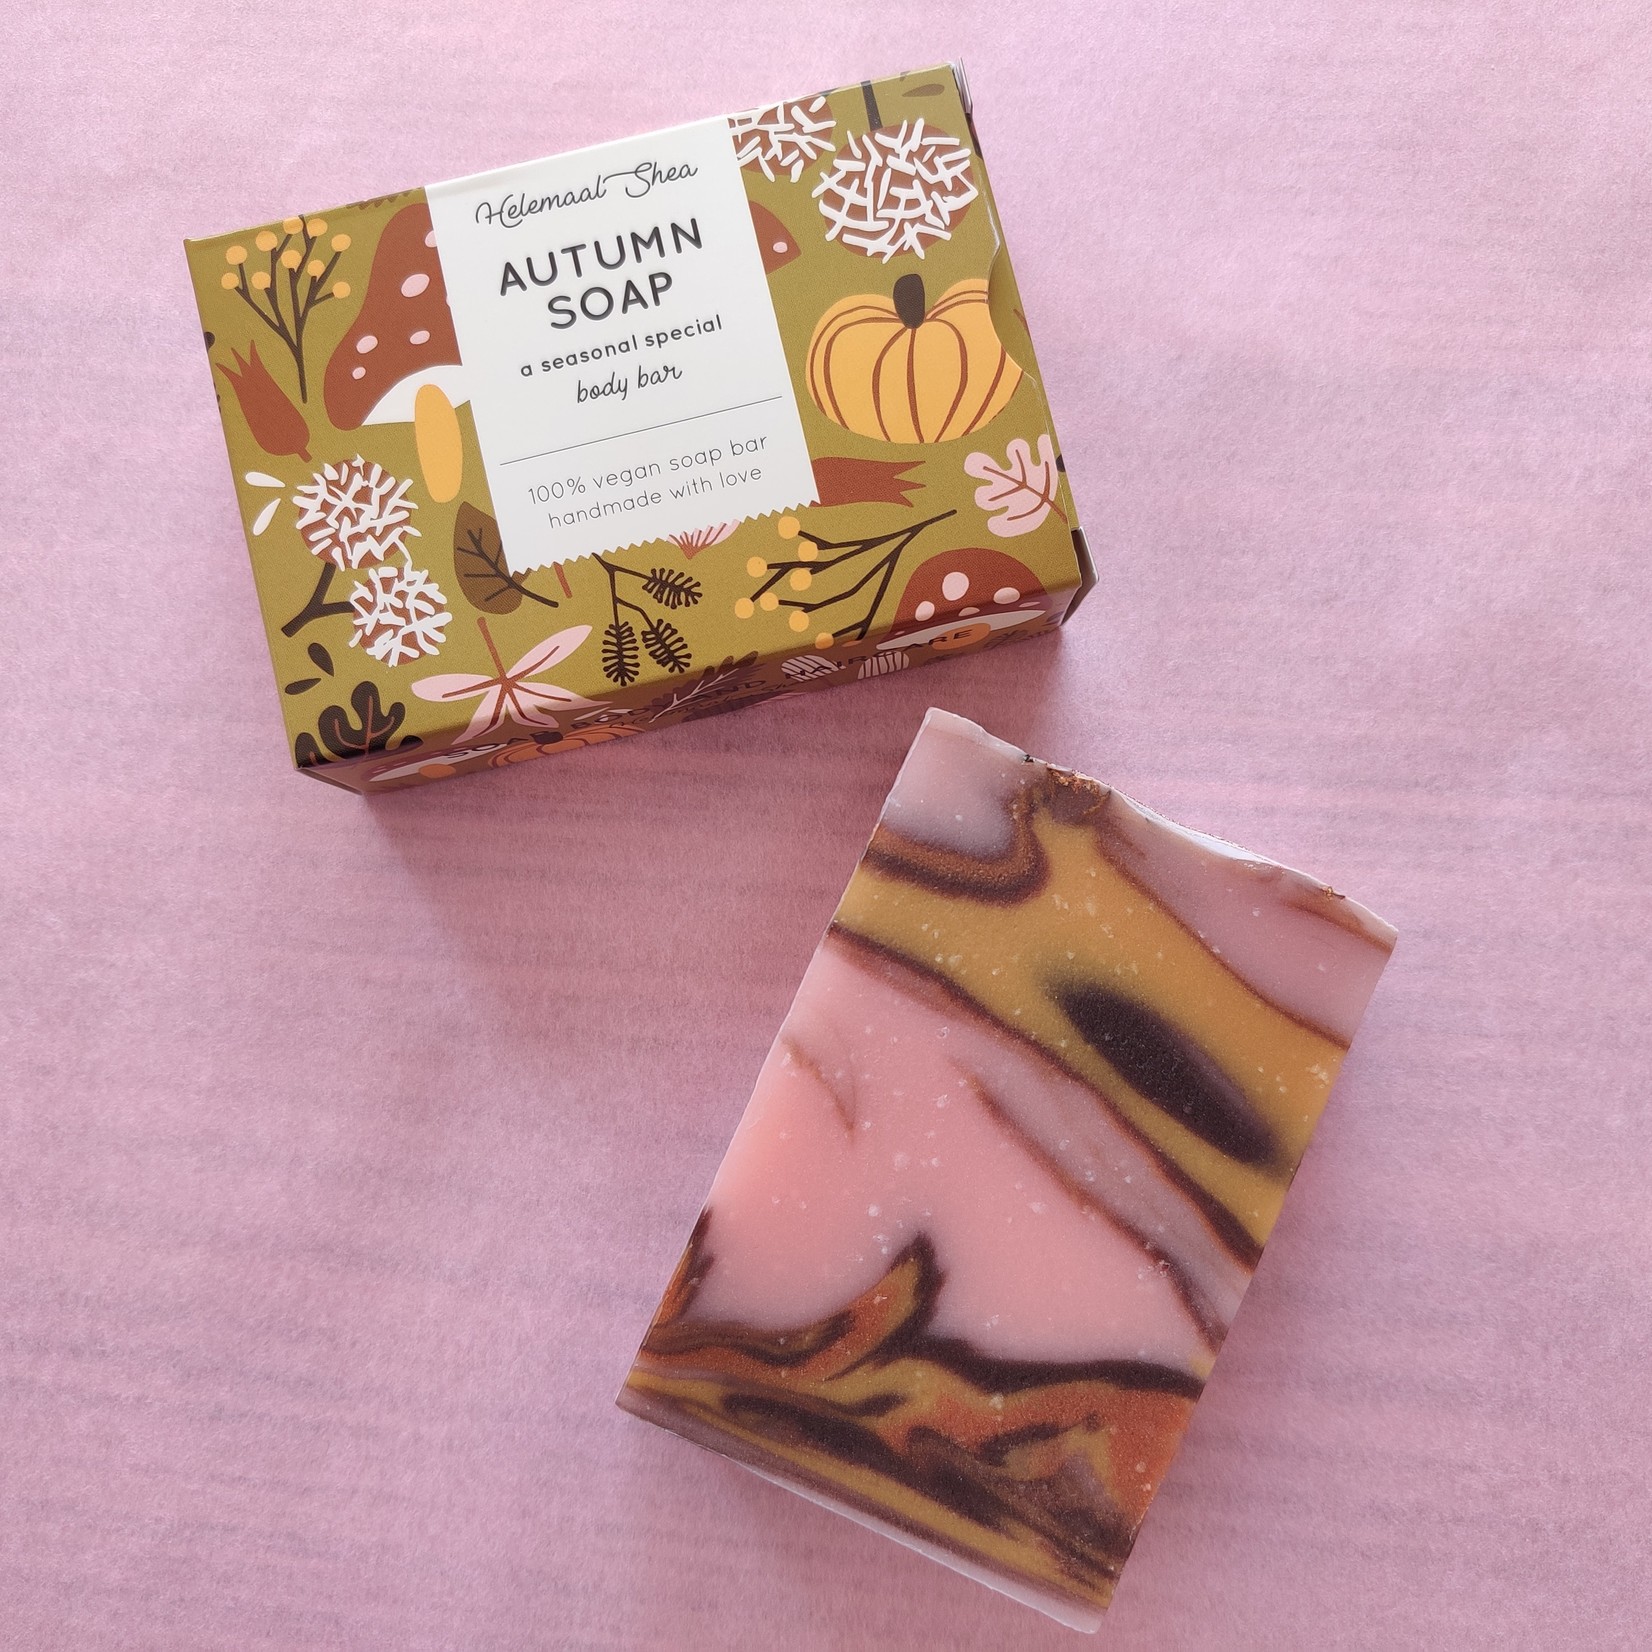 Seasonal special - Autumn soap